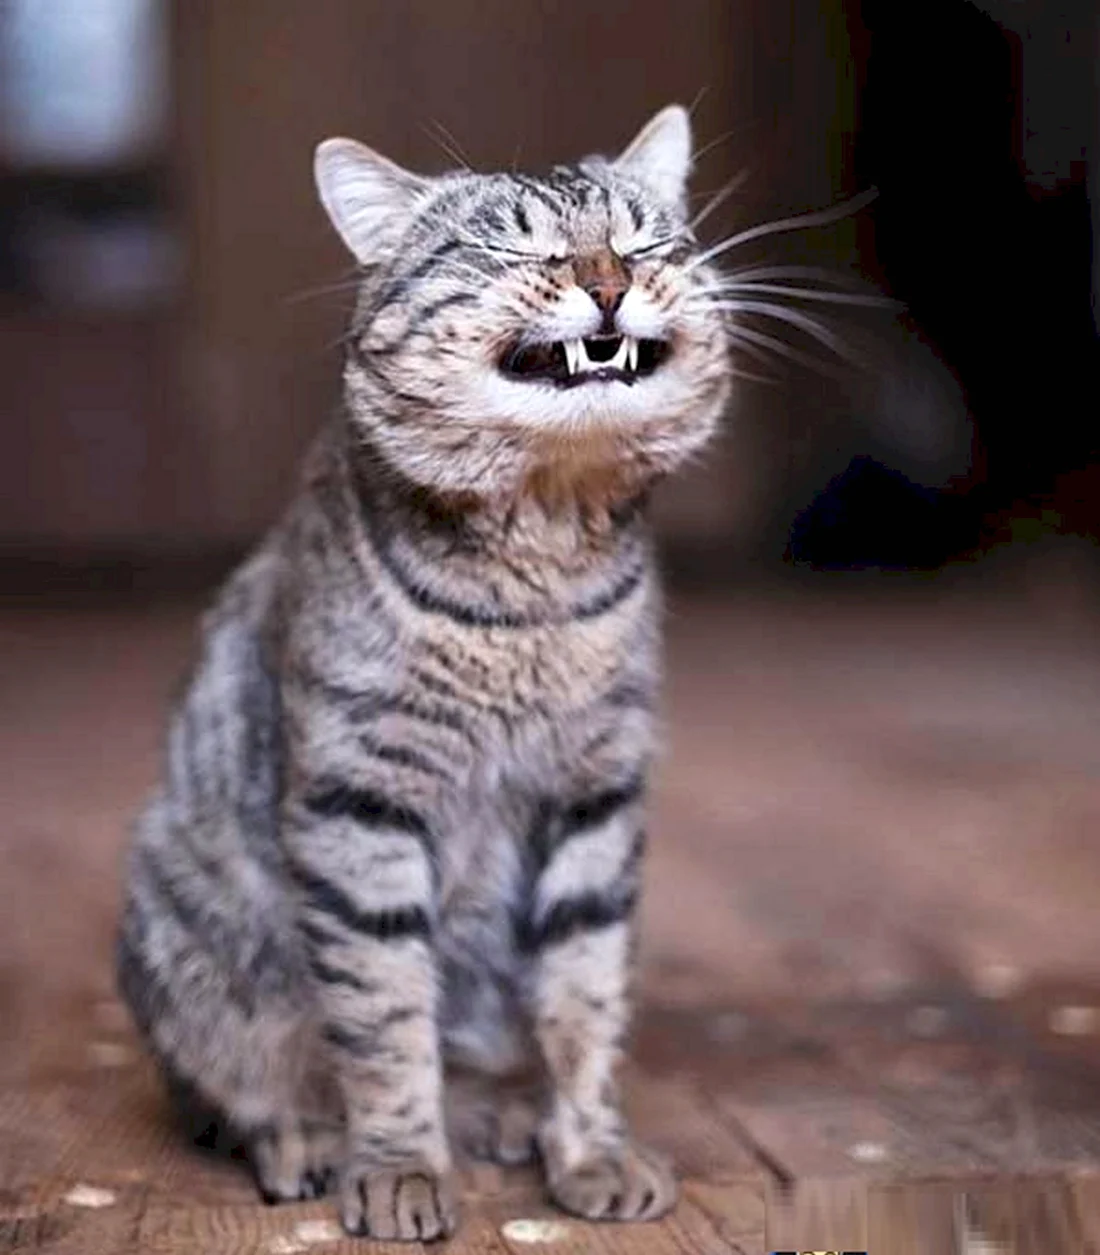 Ехидная улыбка кота